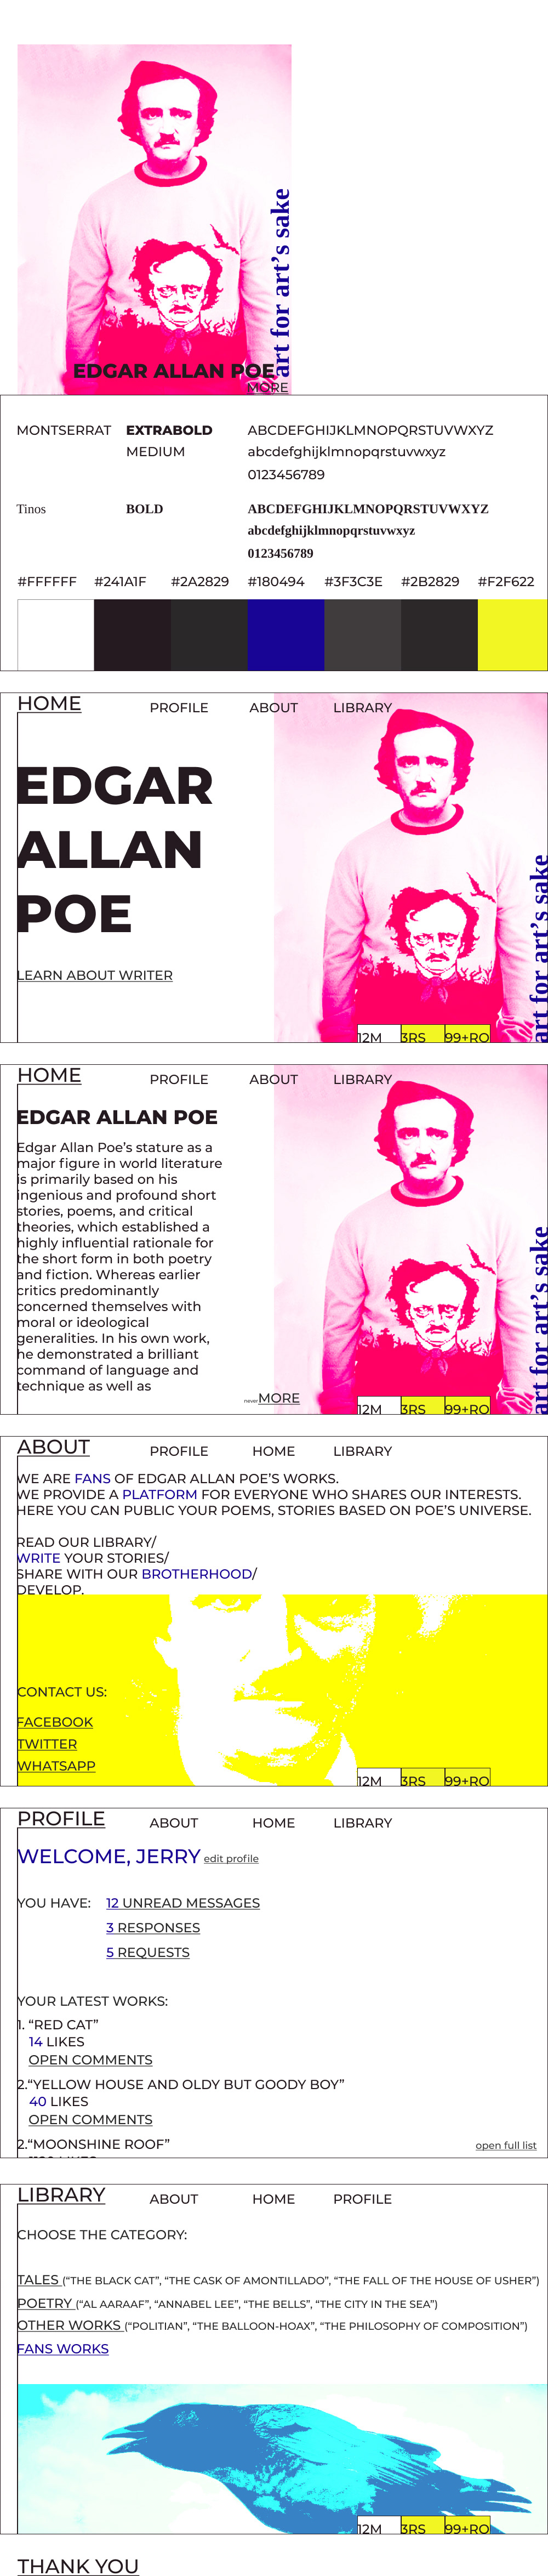 Brutalism design Edgar Allan Poe fan fansite Poe site